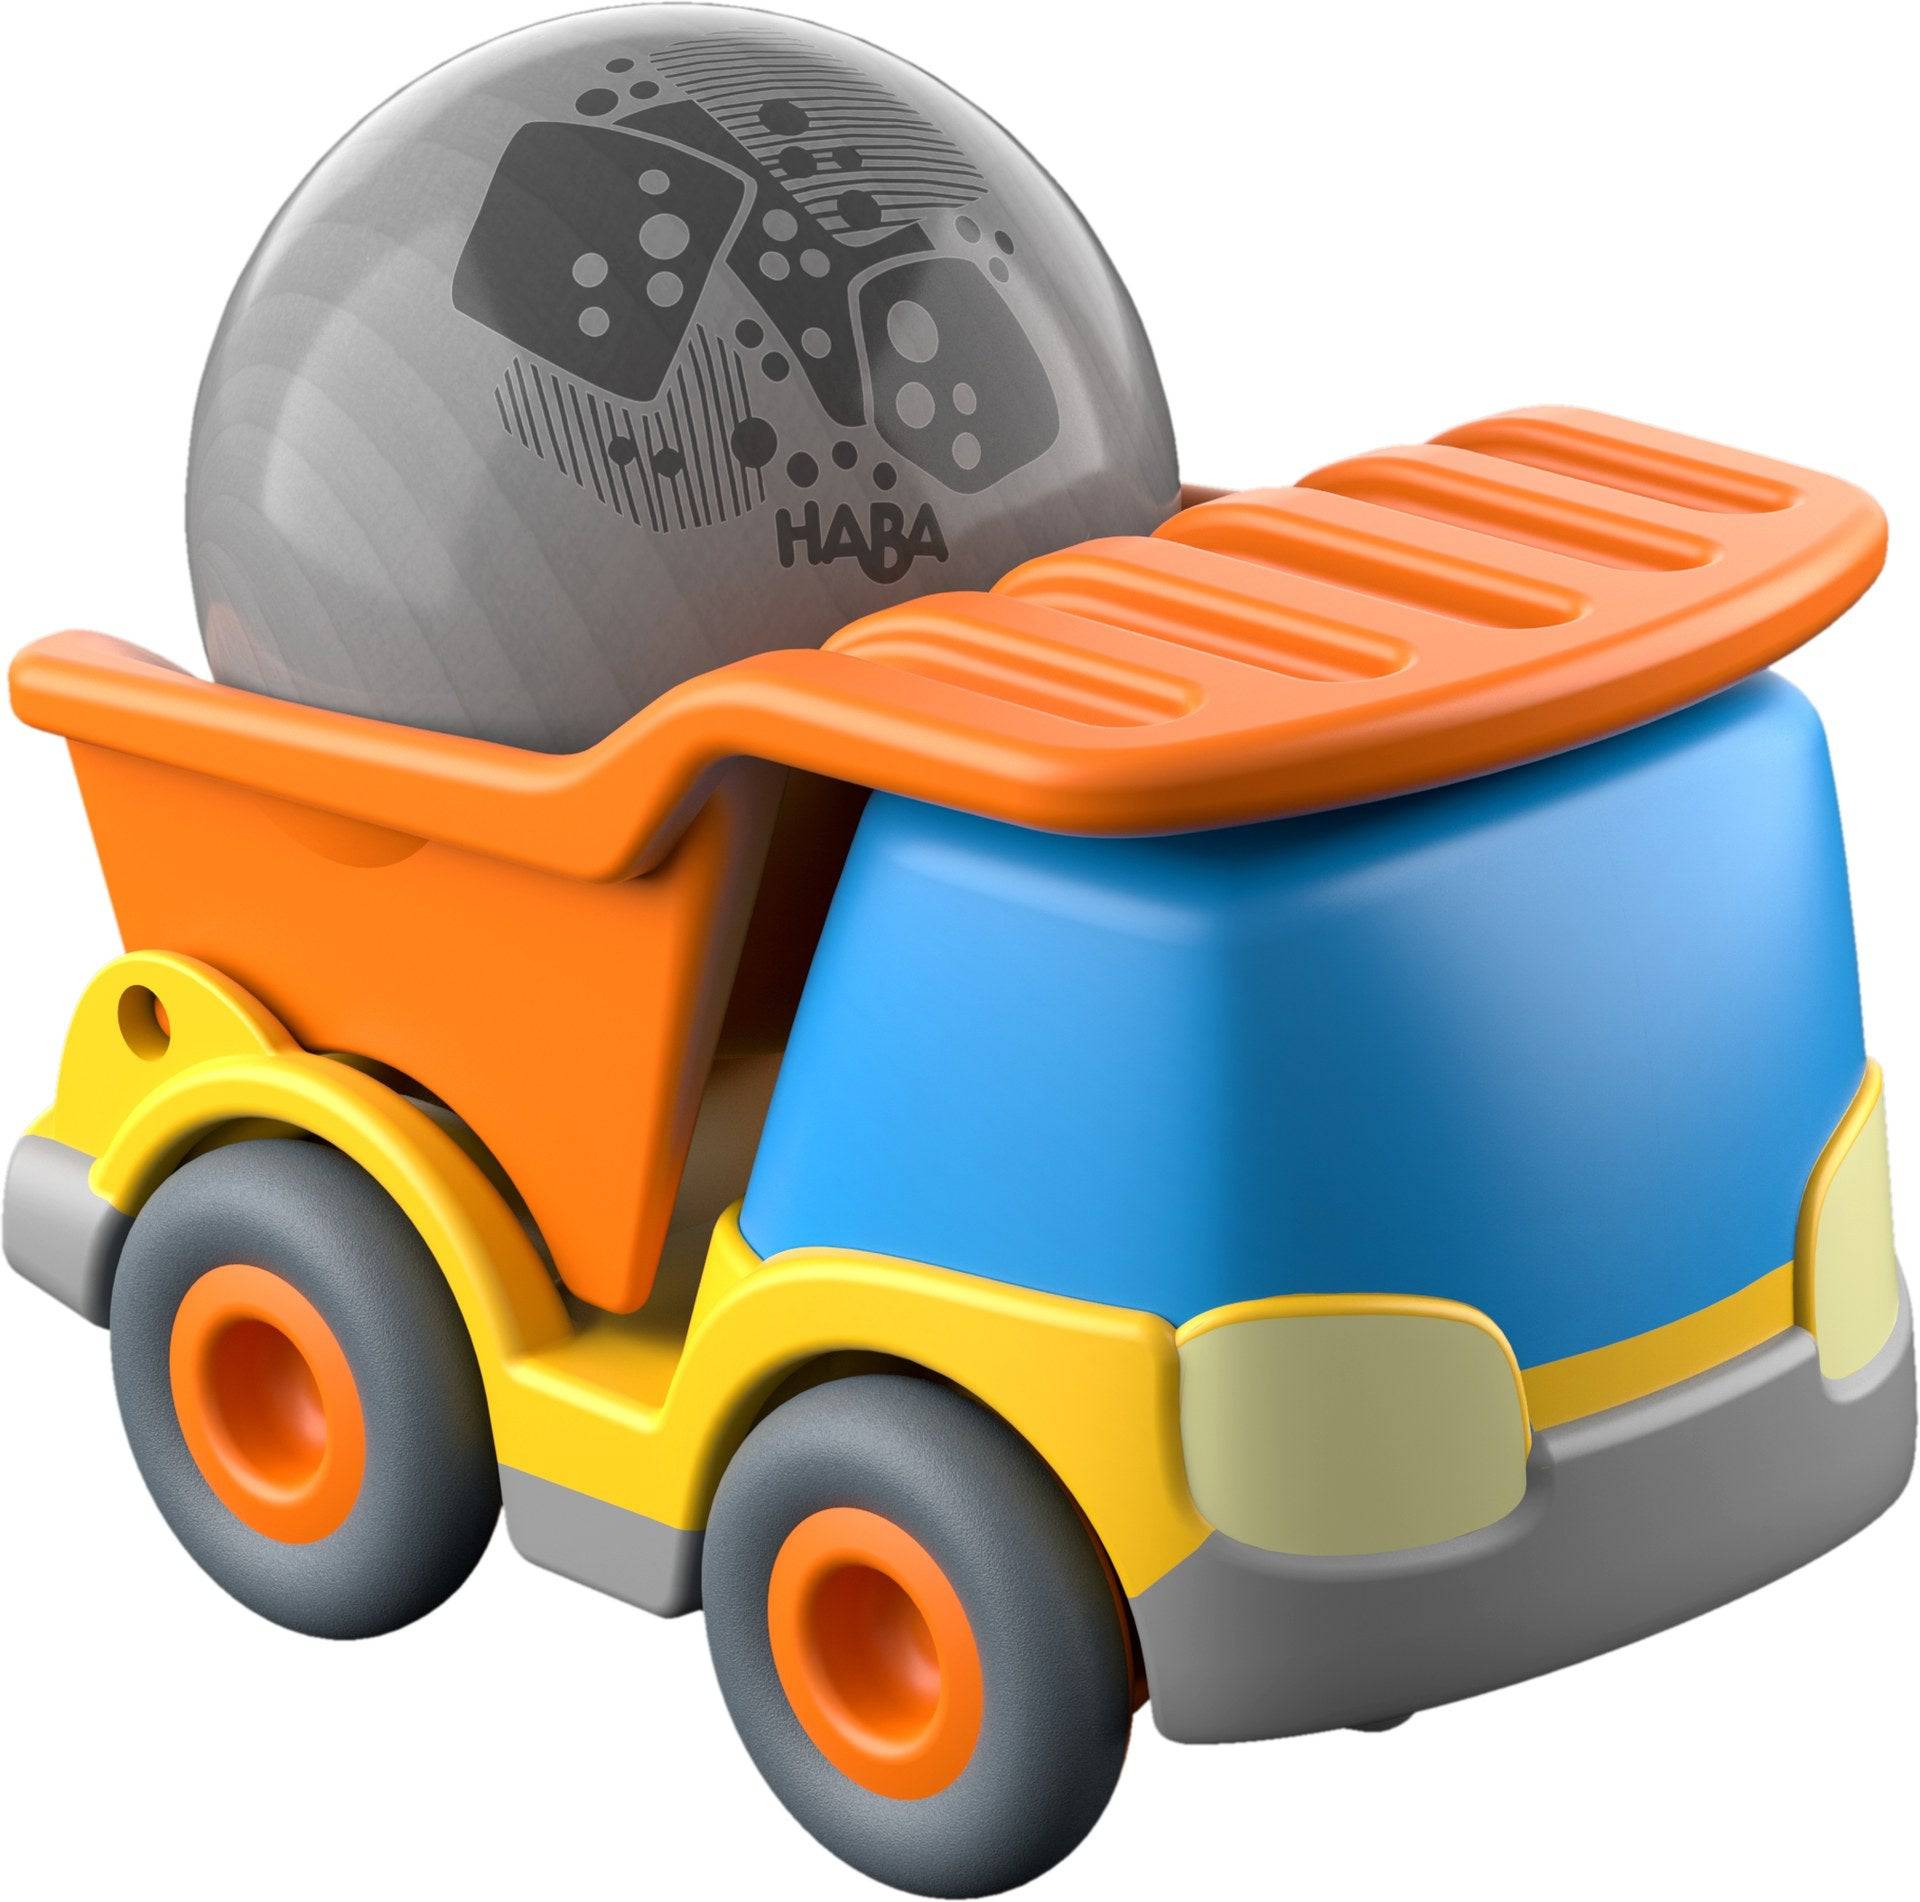 KUBU Dump Truck - A Child's Delight